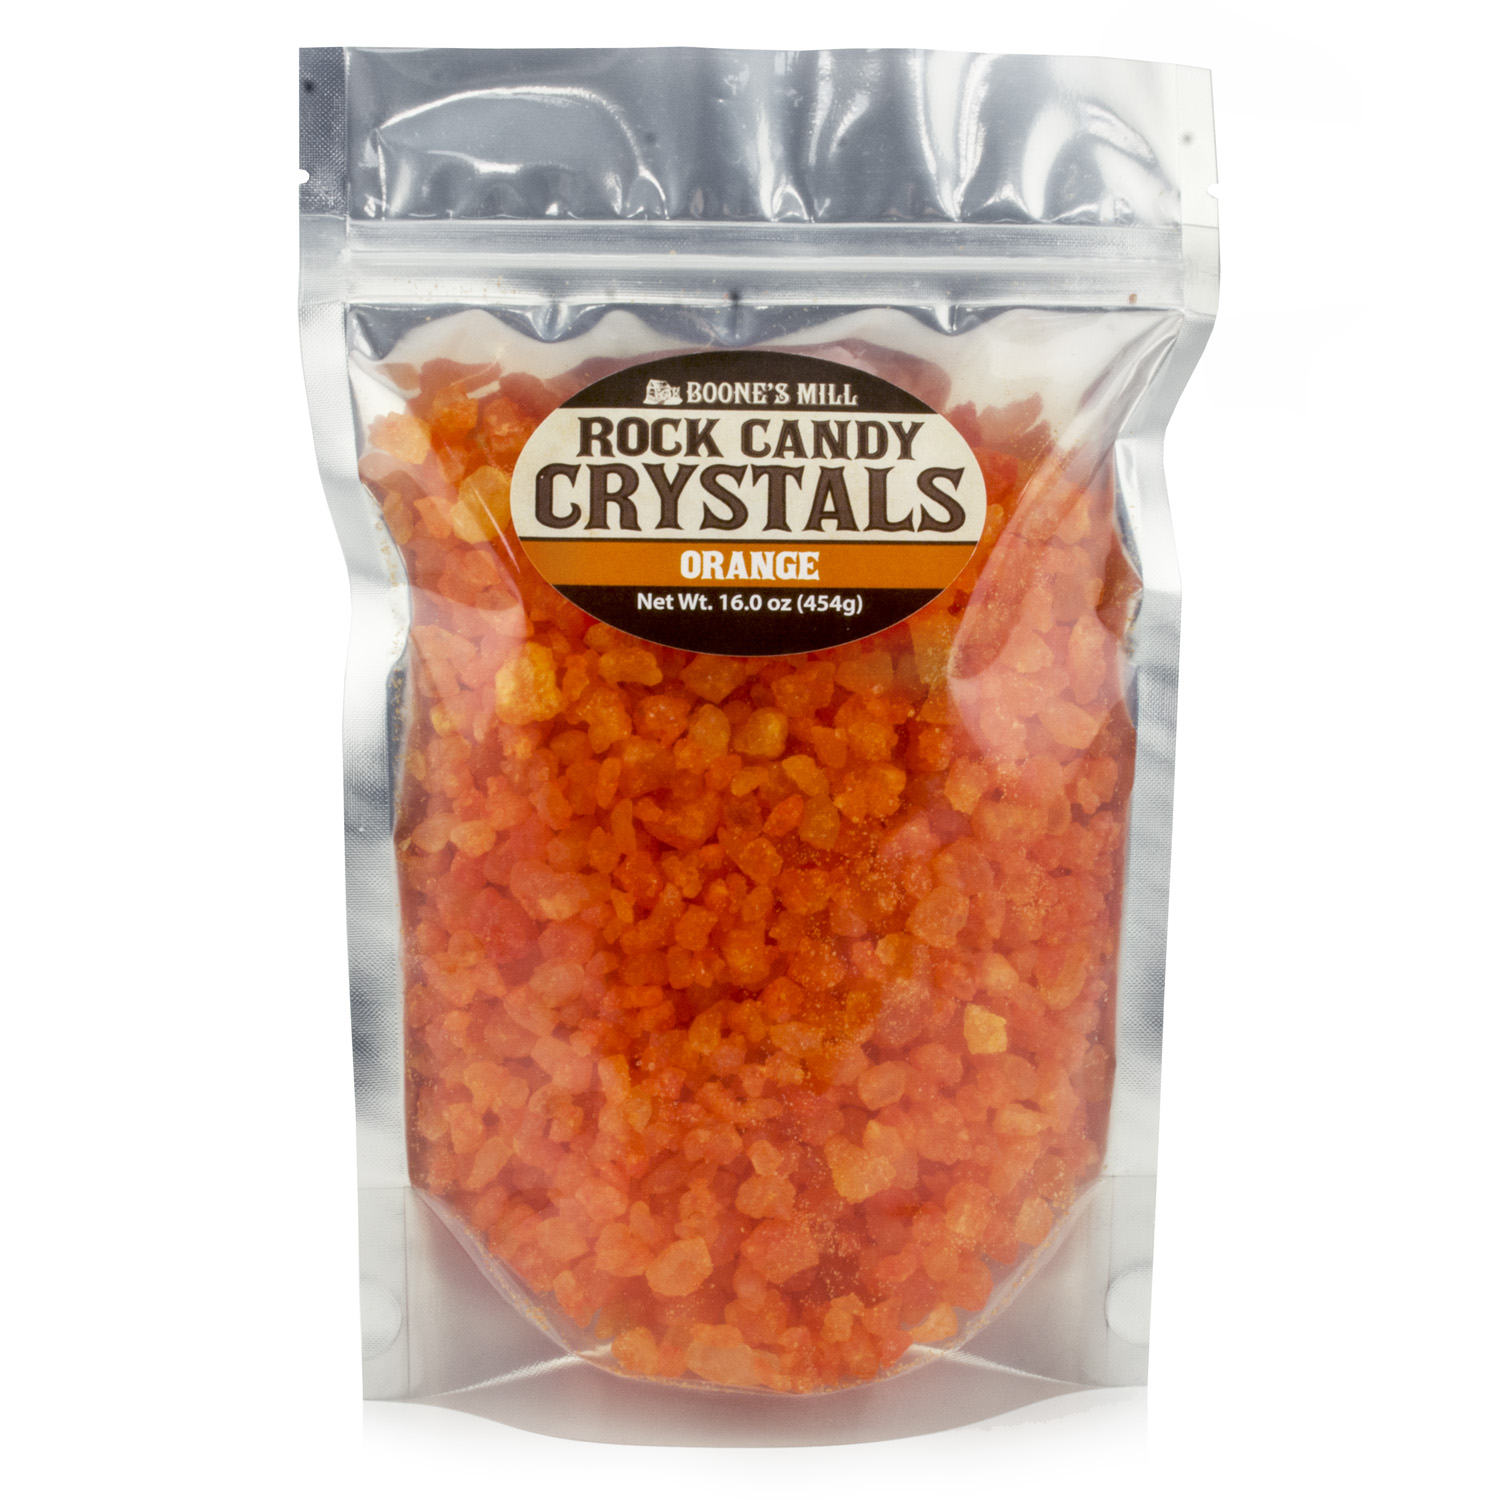 Orange Rock Candy Crystals in 1 pound bag